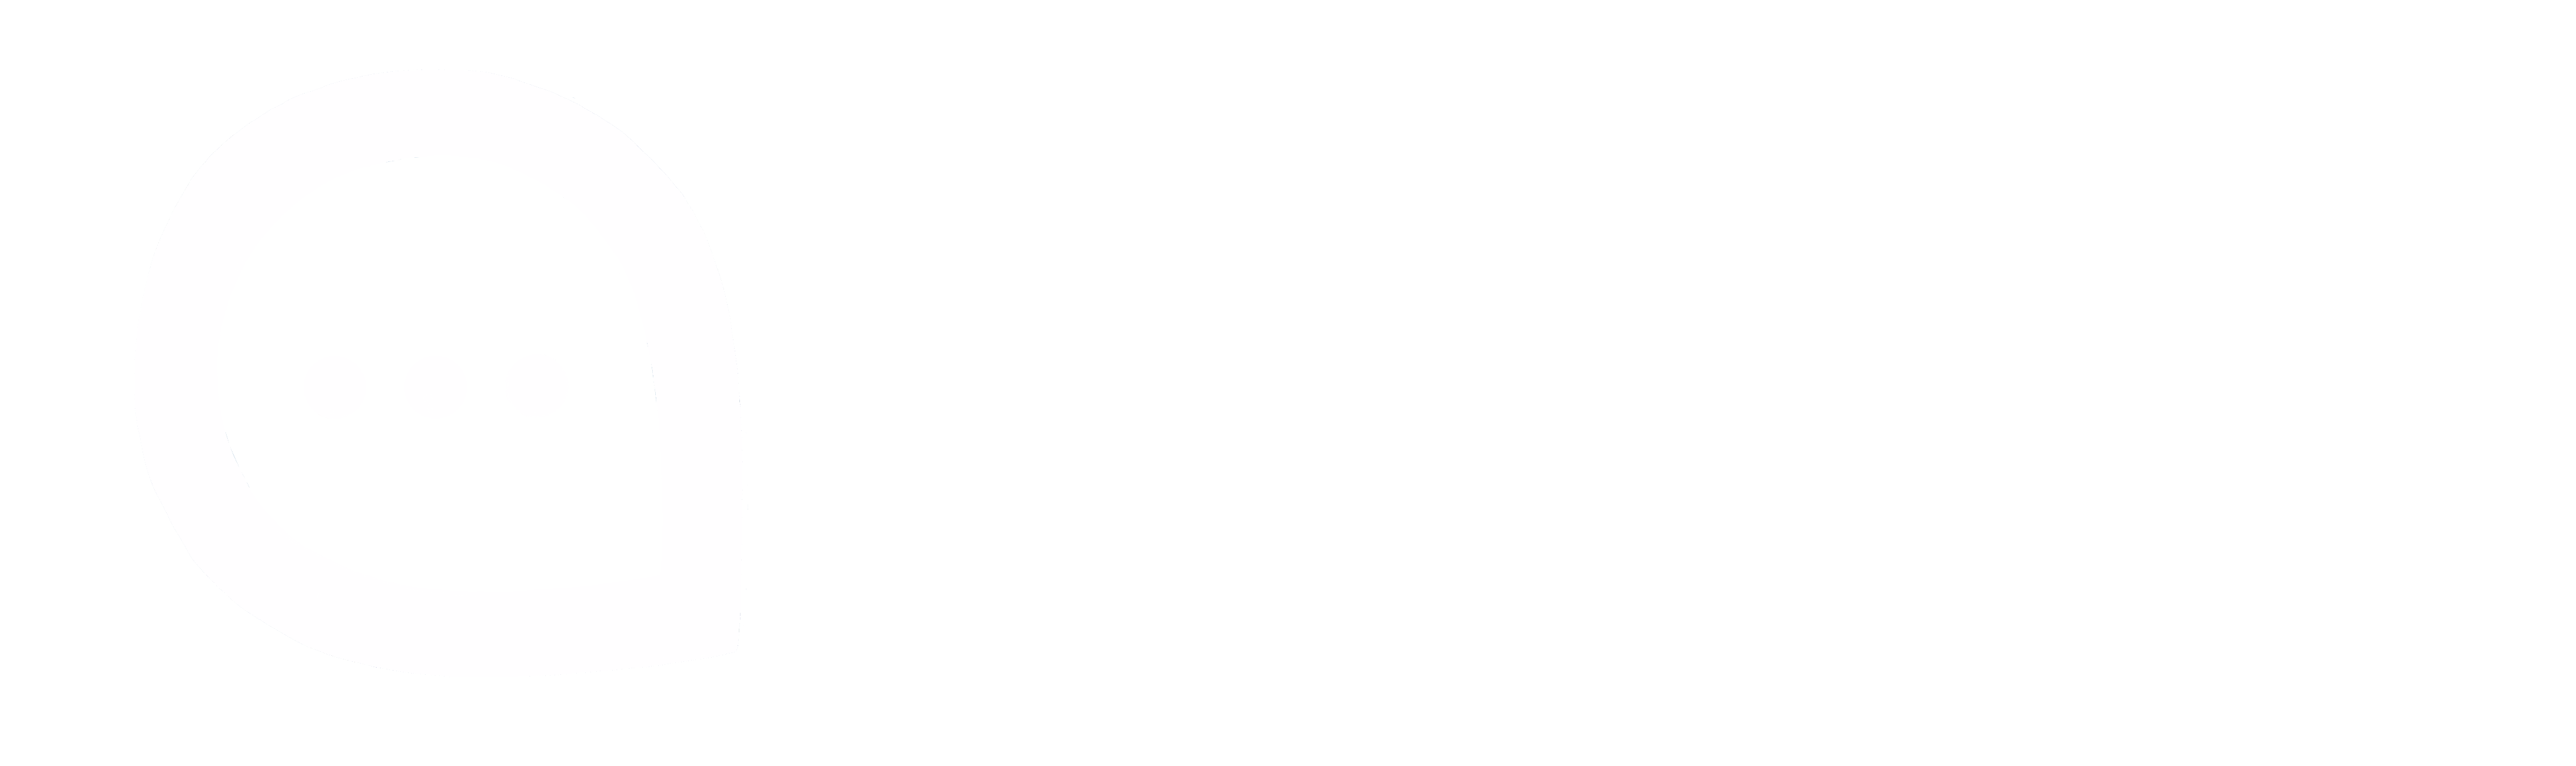 imkit logo